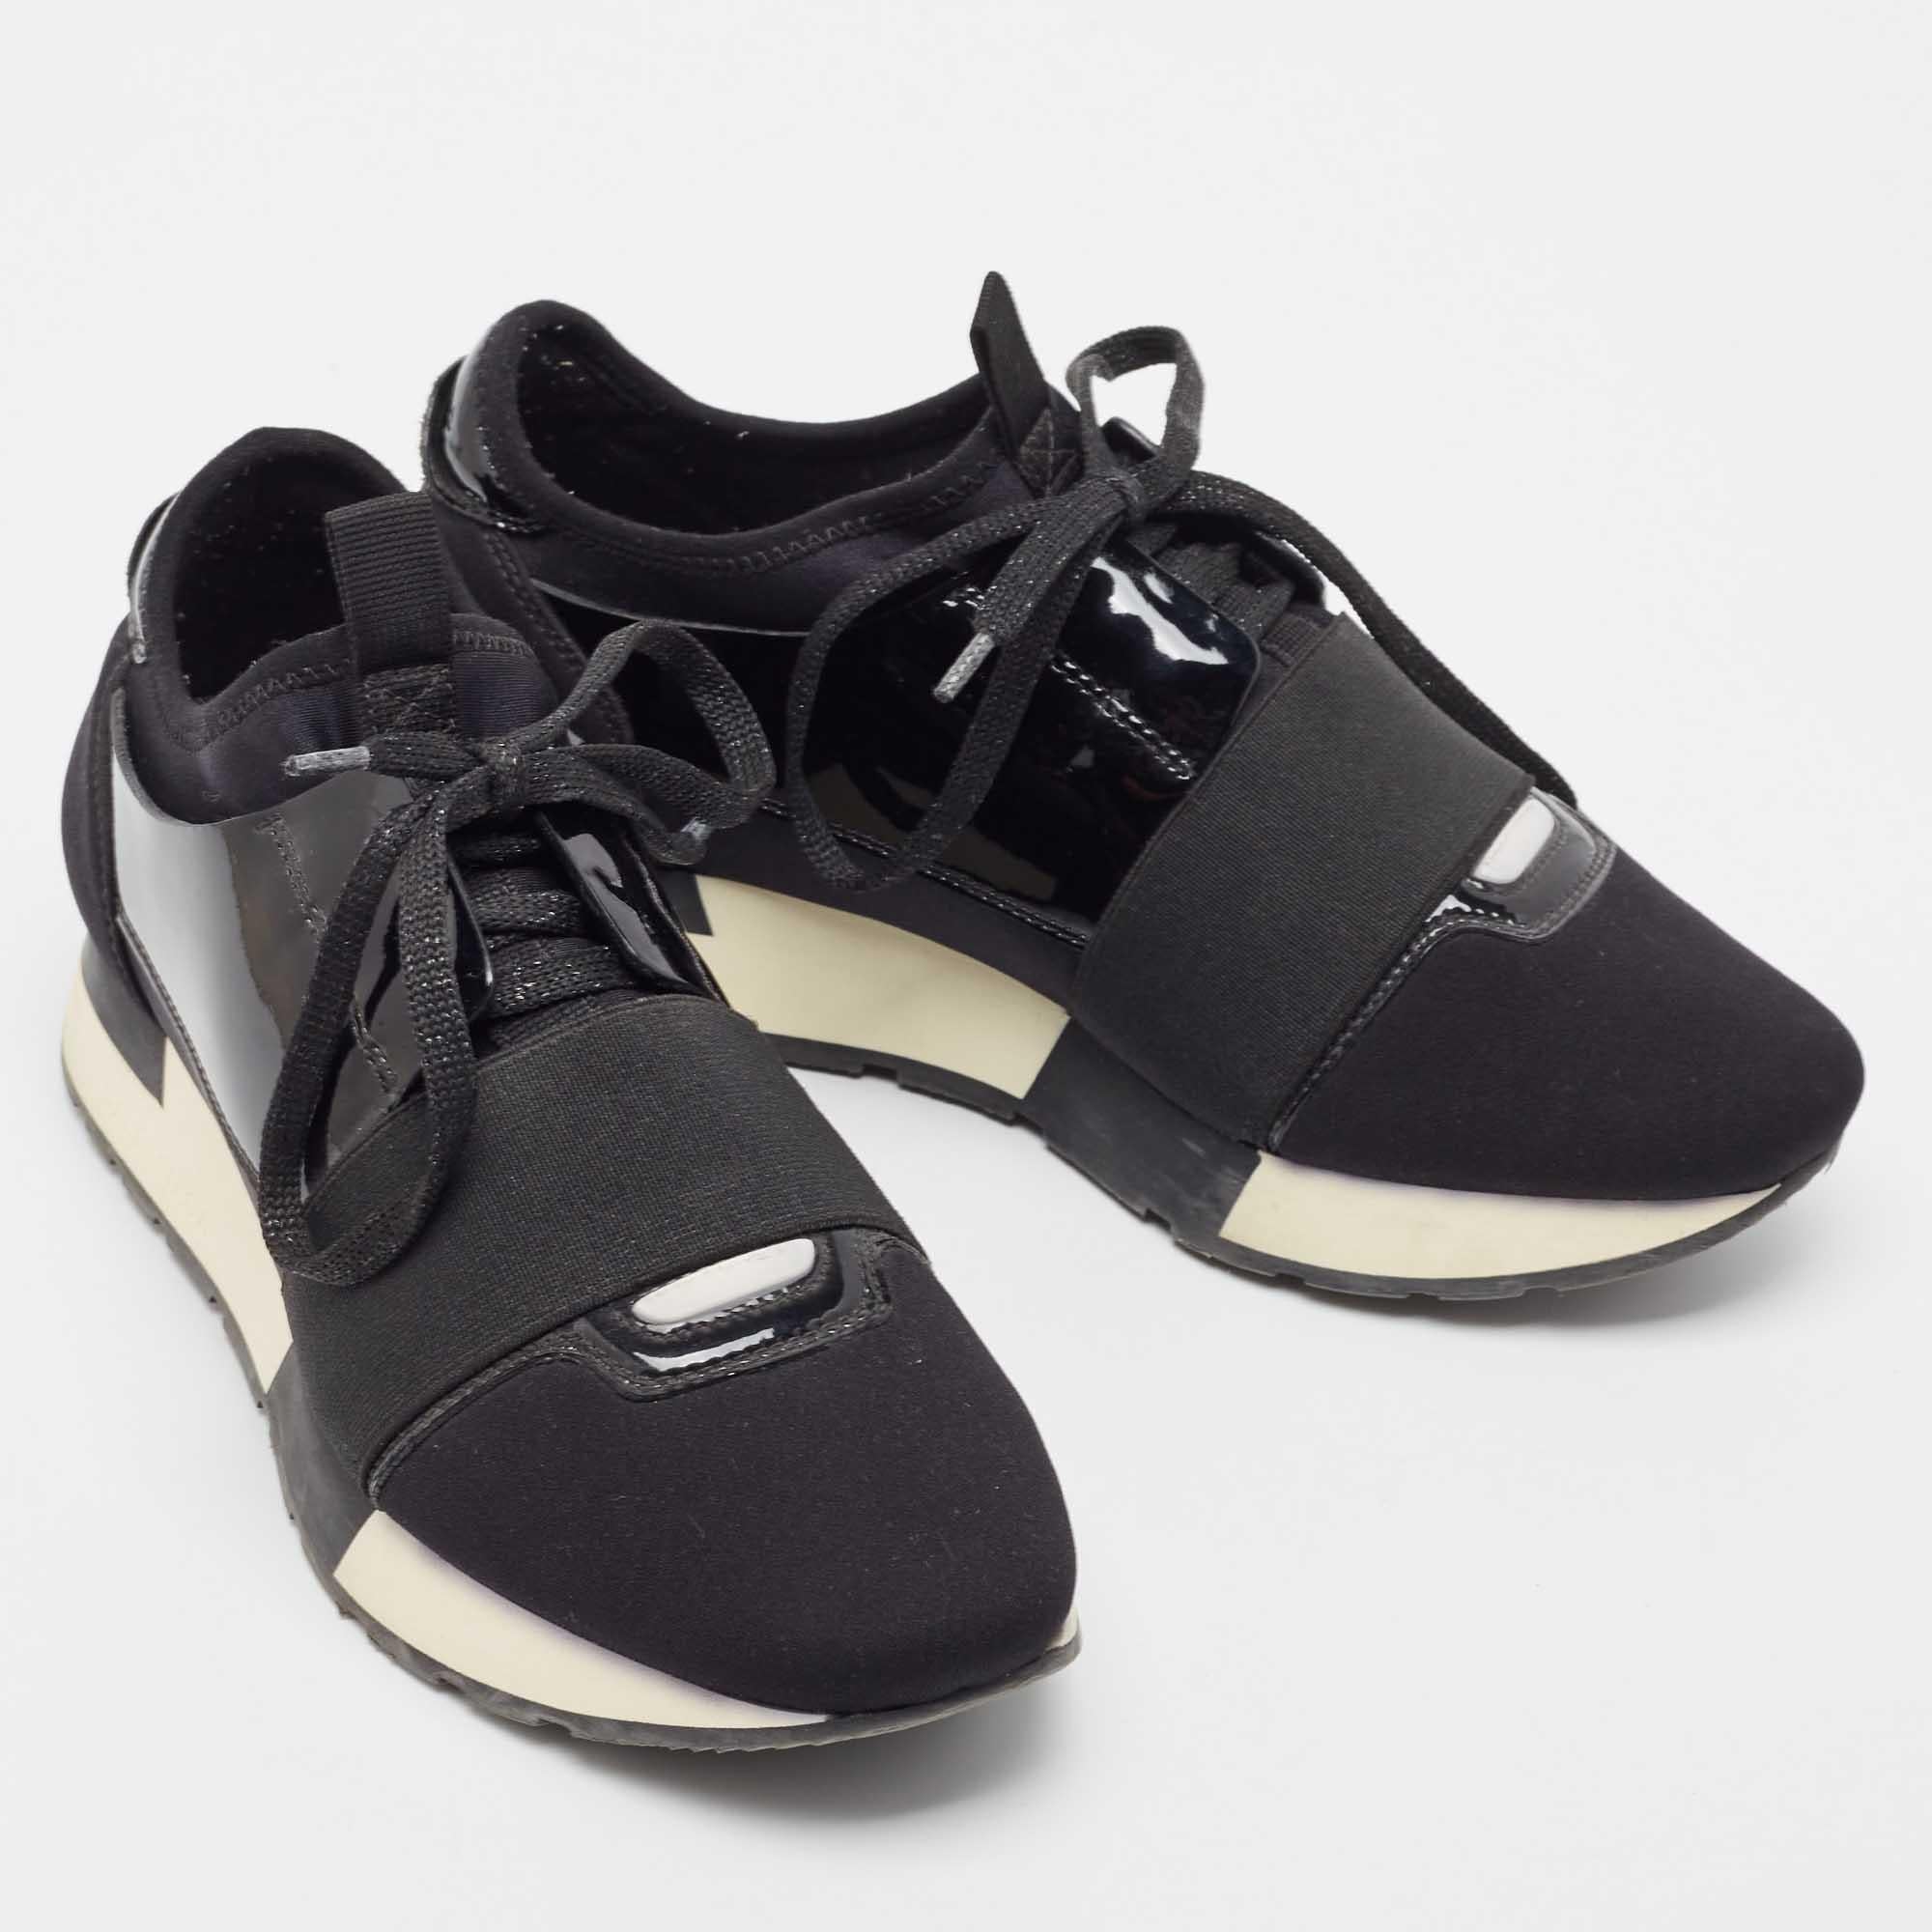 Balenciaga Black Neoprene and Patent Race Runner Sneakers Size 37 In Good Condition For Sale In Dubai, Al Qouz 2